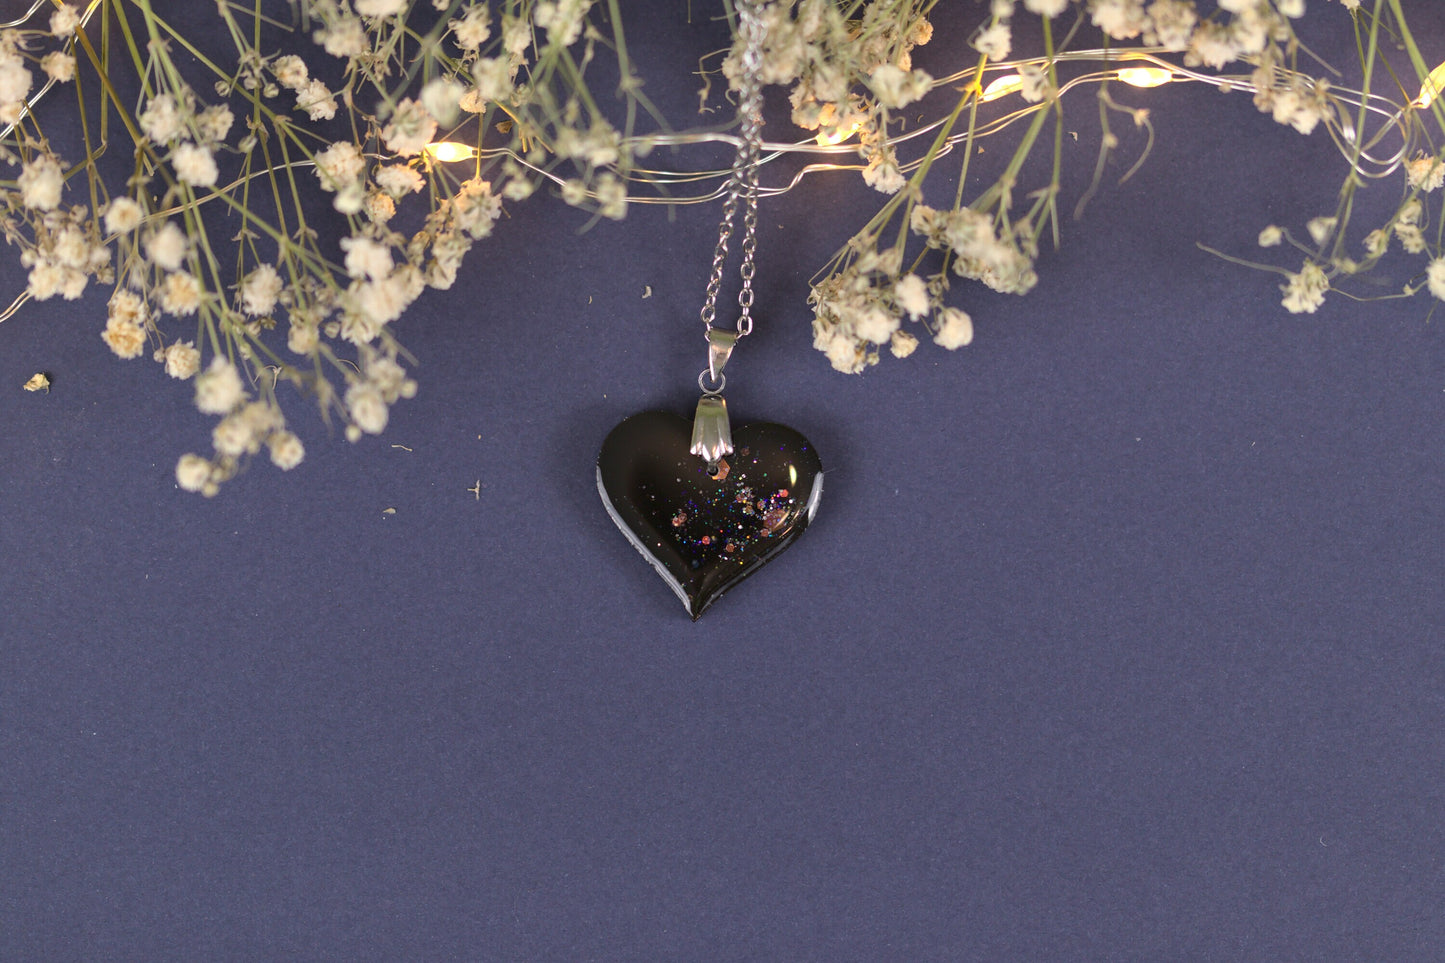 Colier mic - Inima - Inox - Negru cu Argintiu - Handmade (Colecția Nebula)